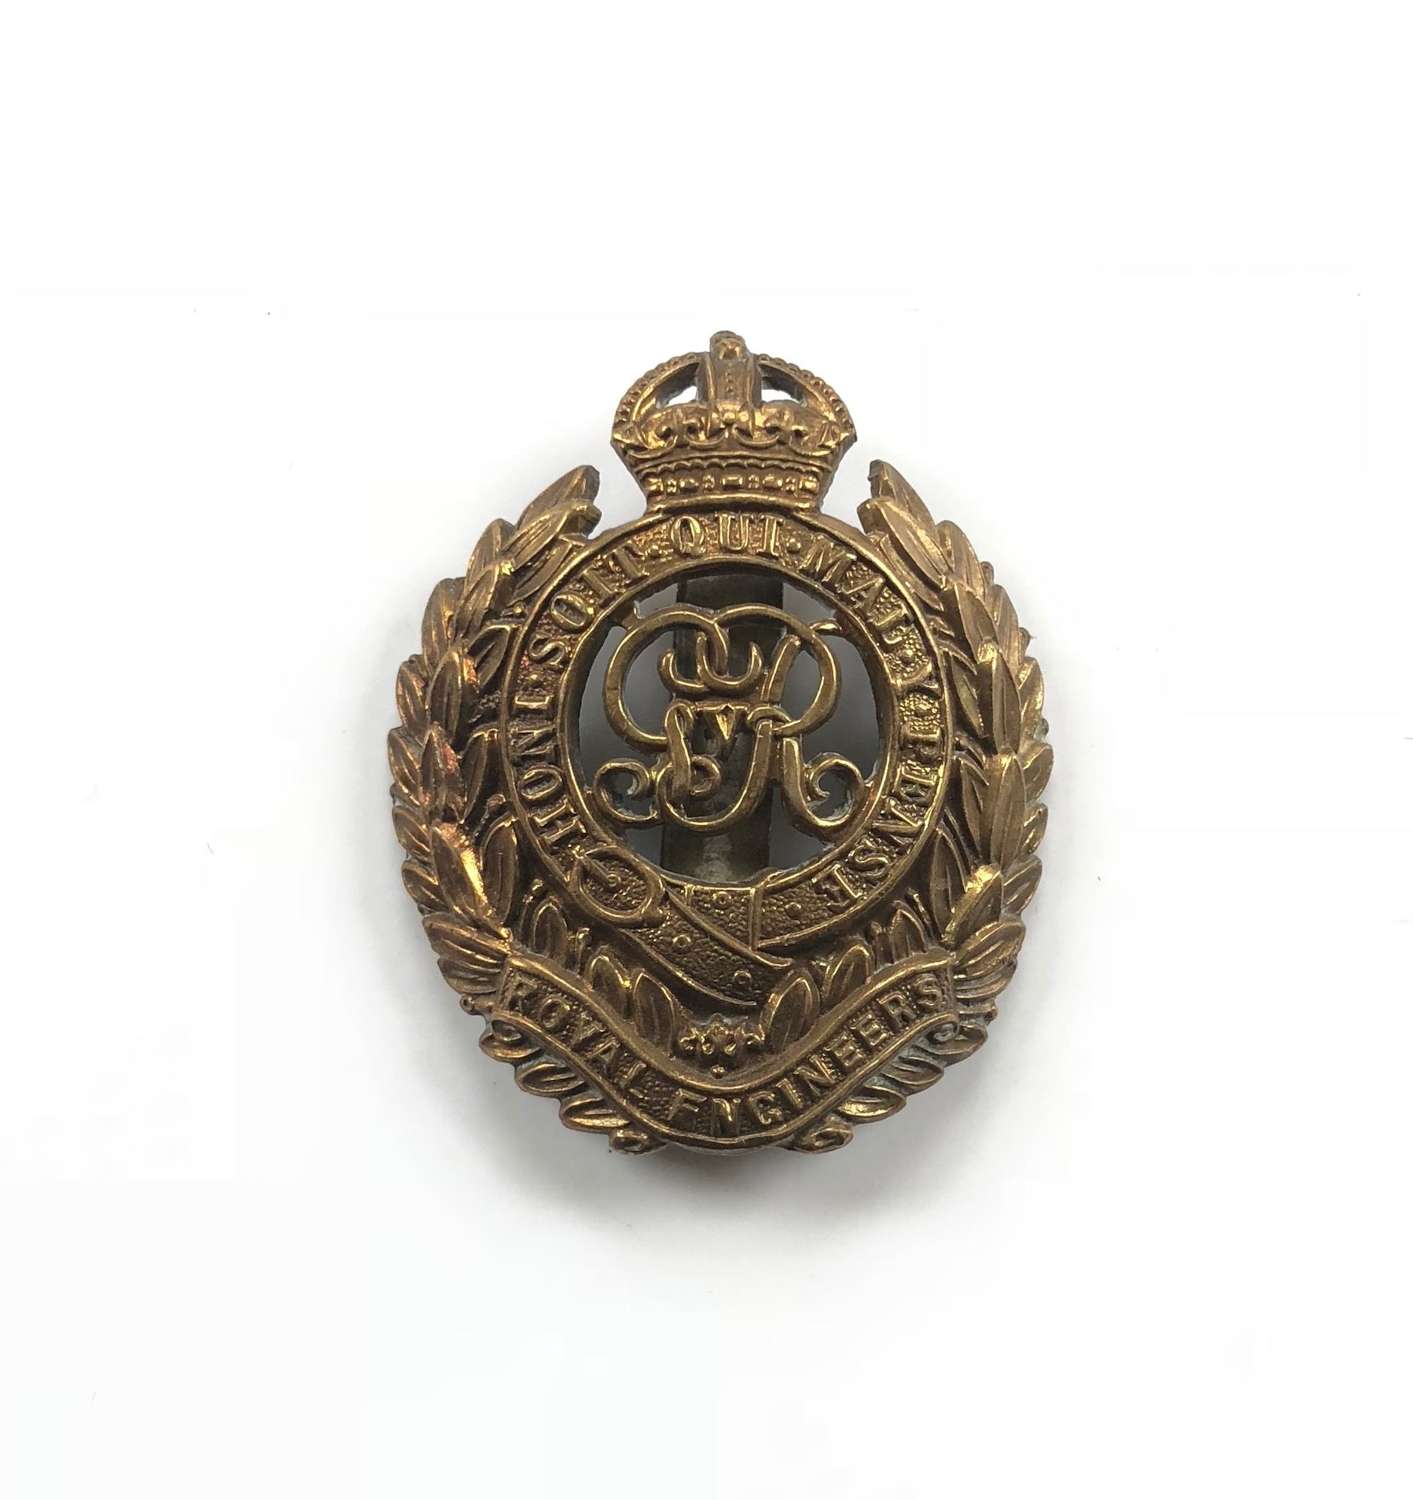 WW1 Period Royal Engineers Cap Badge.